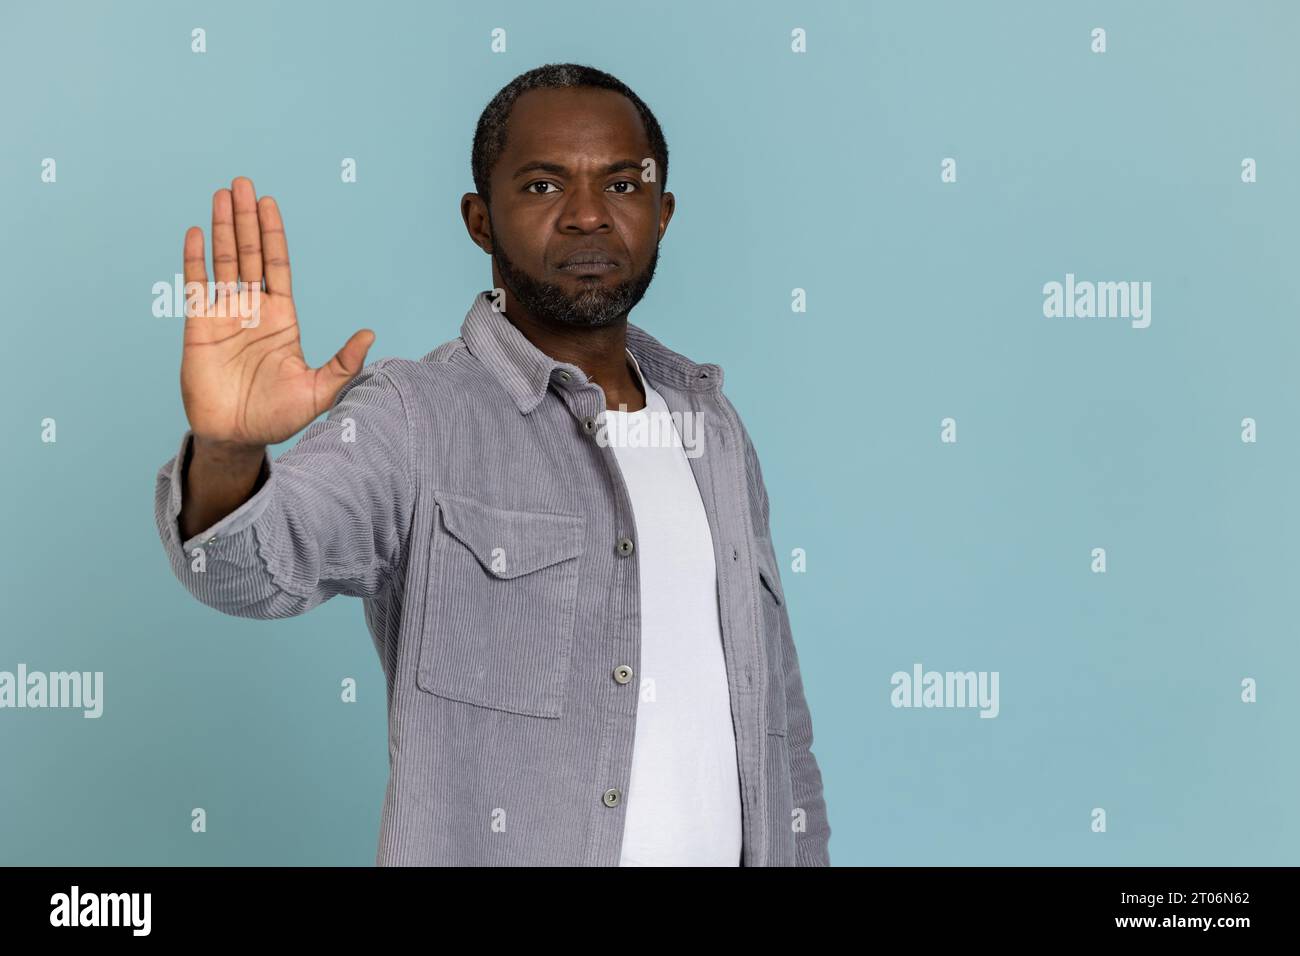 Serious black man wearing gray shirt showing stop sign Stock Photo